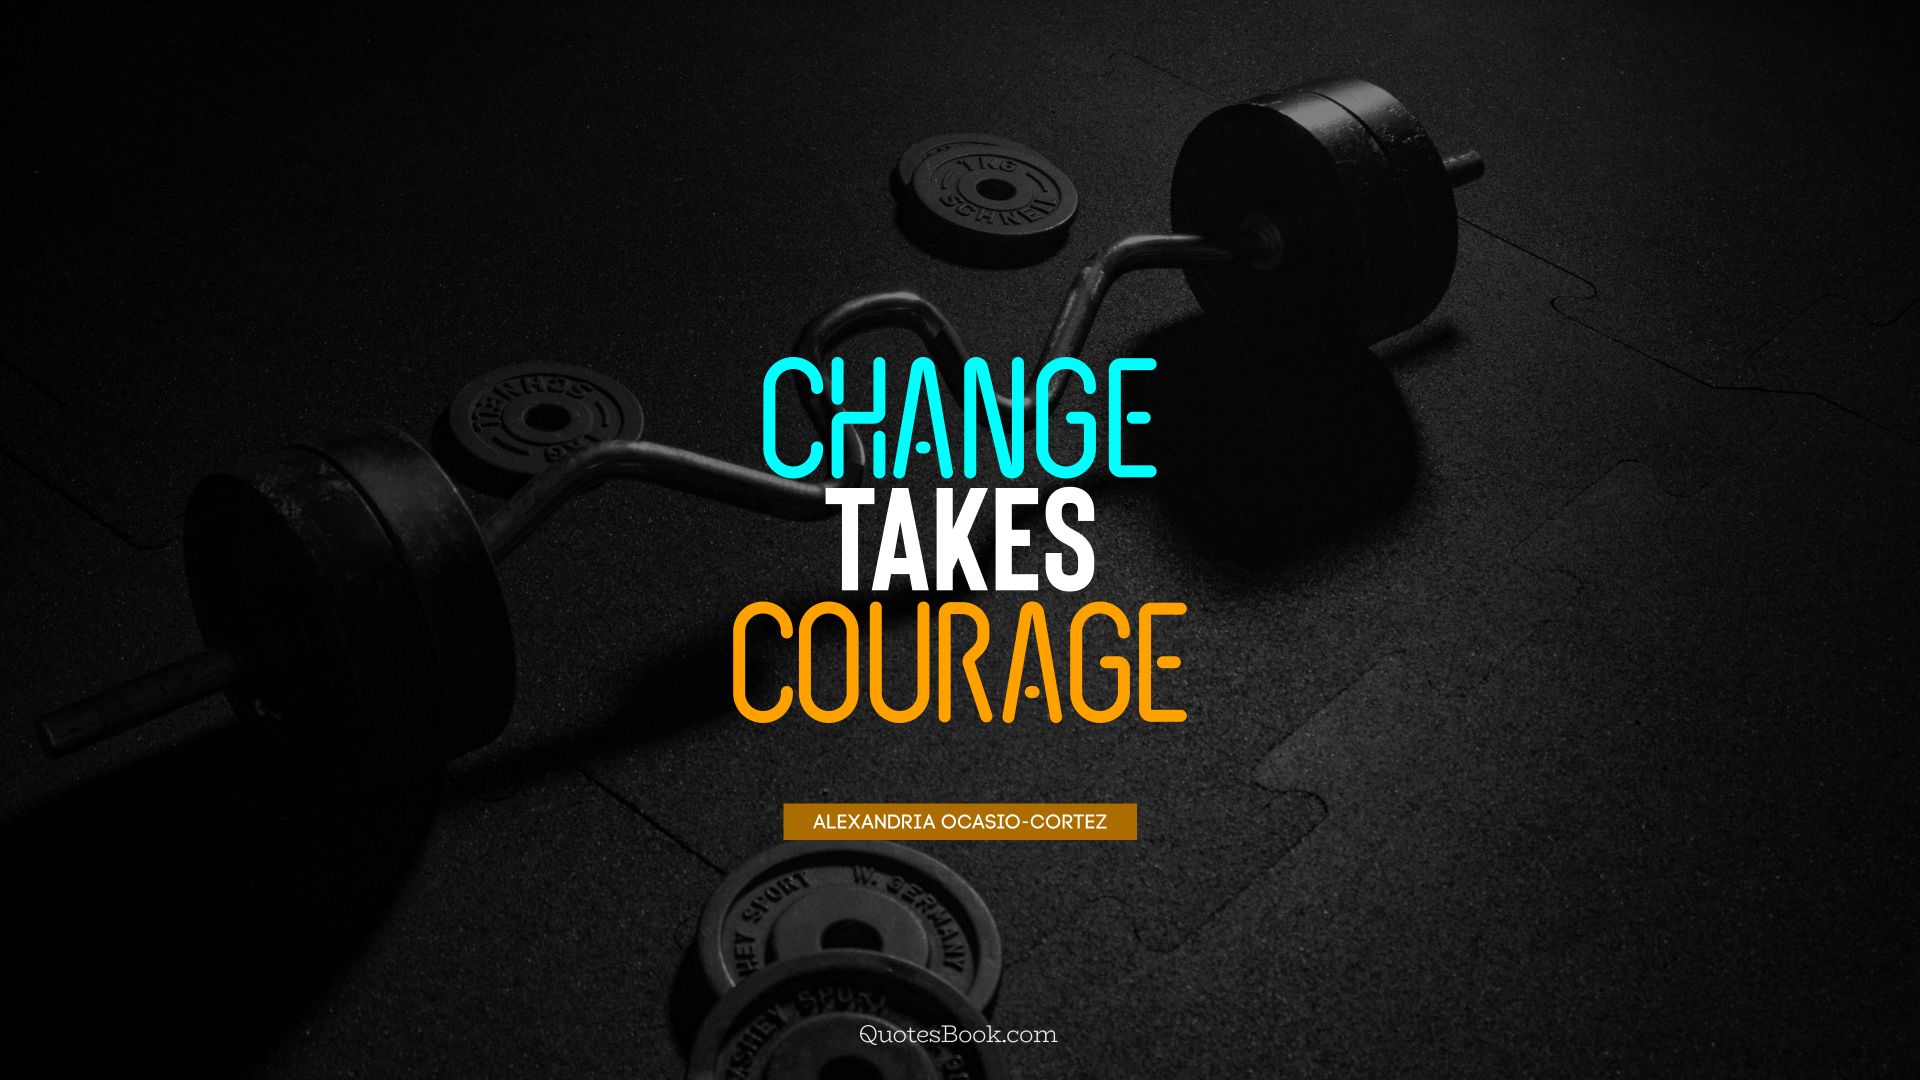 Change takes courage. - Quote by Alexandria Ocasio-Cortez